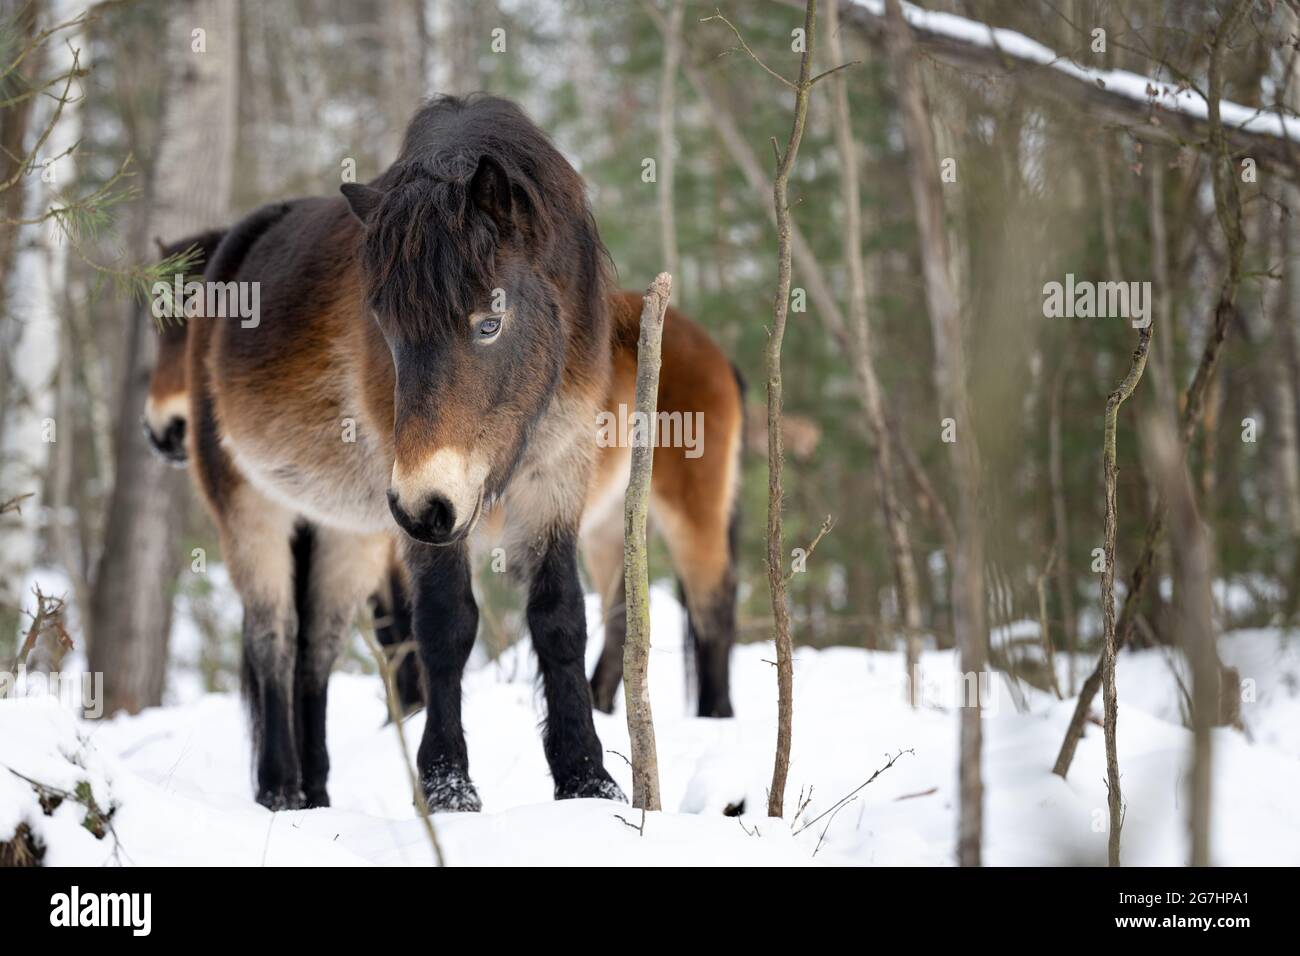 Wild horses graze in a nature reserve in the Czech Republic near the city of Hradec Králové. Stock Photo